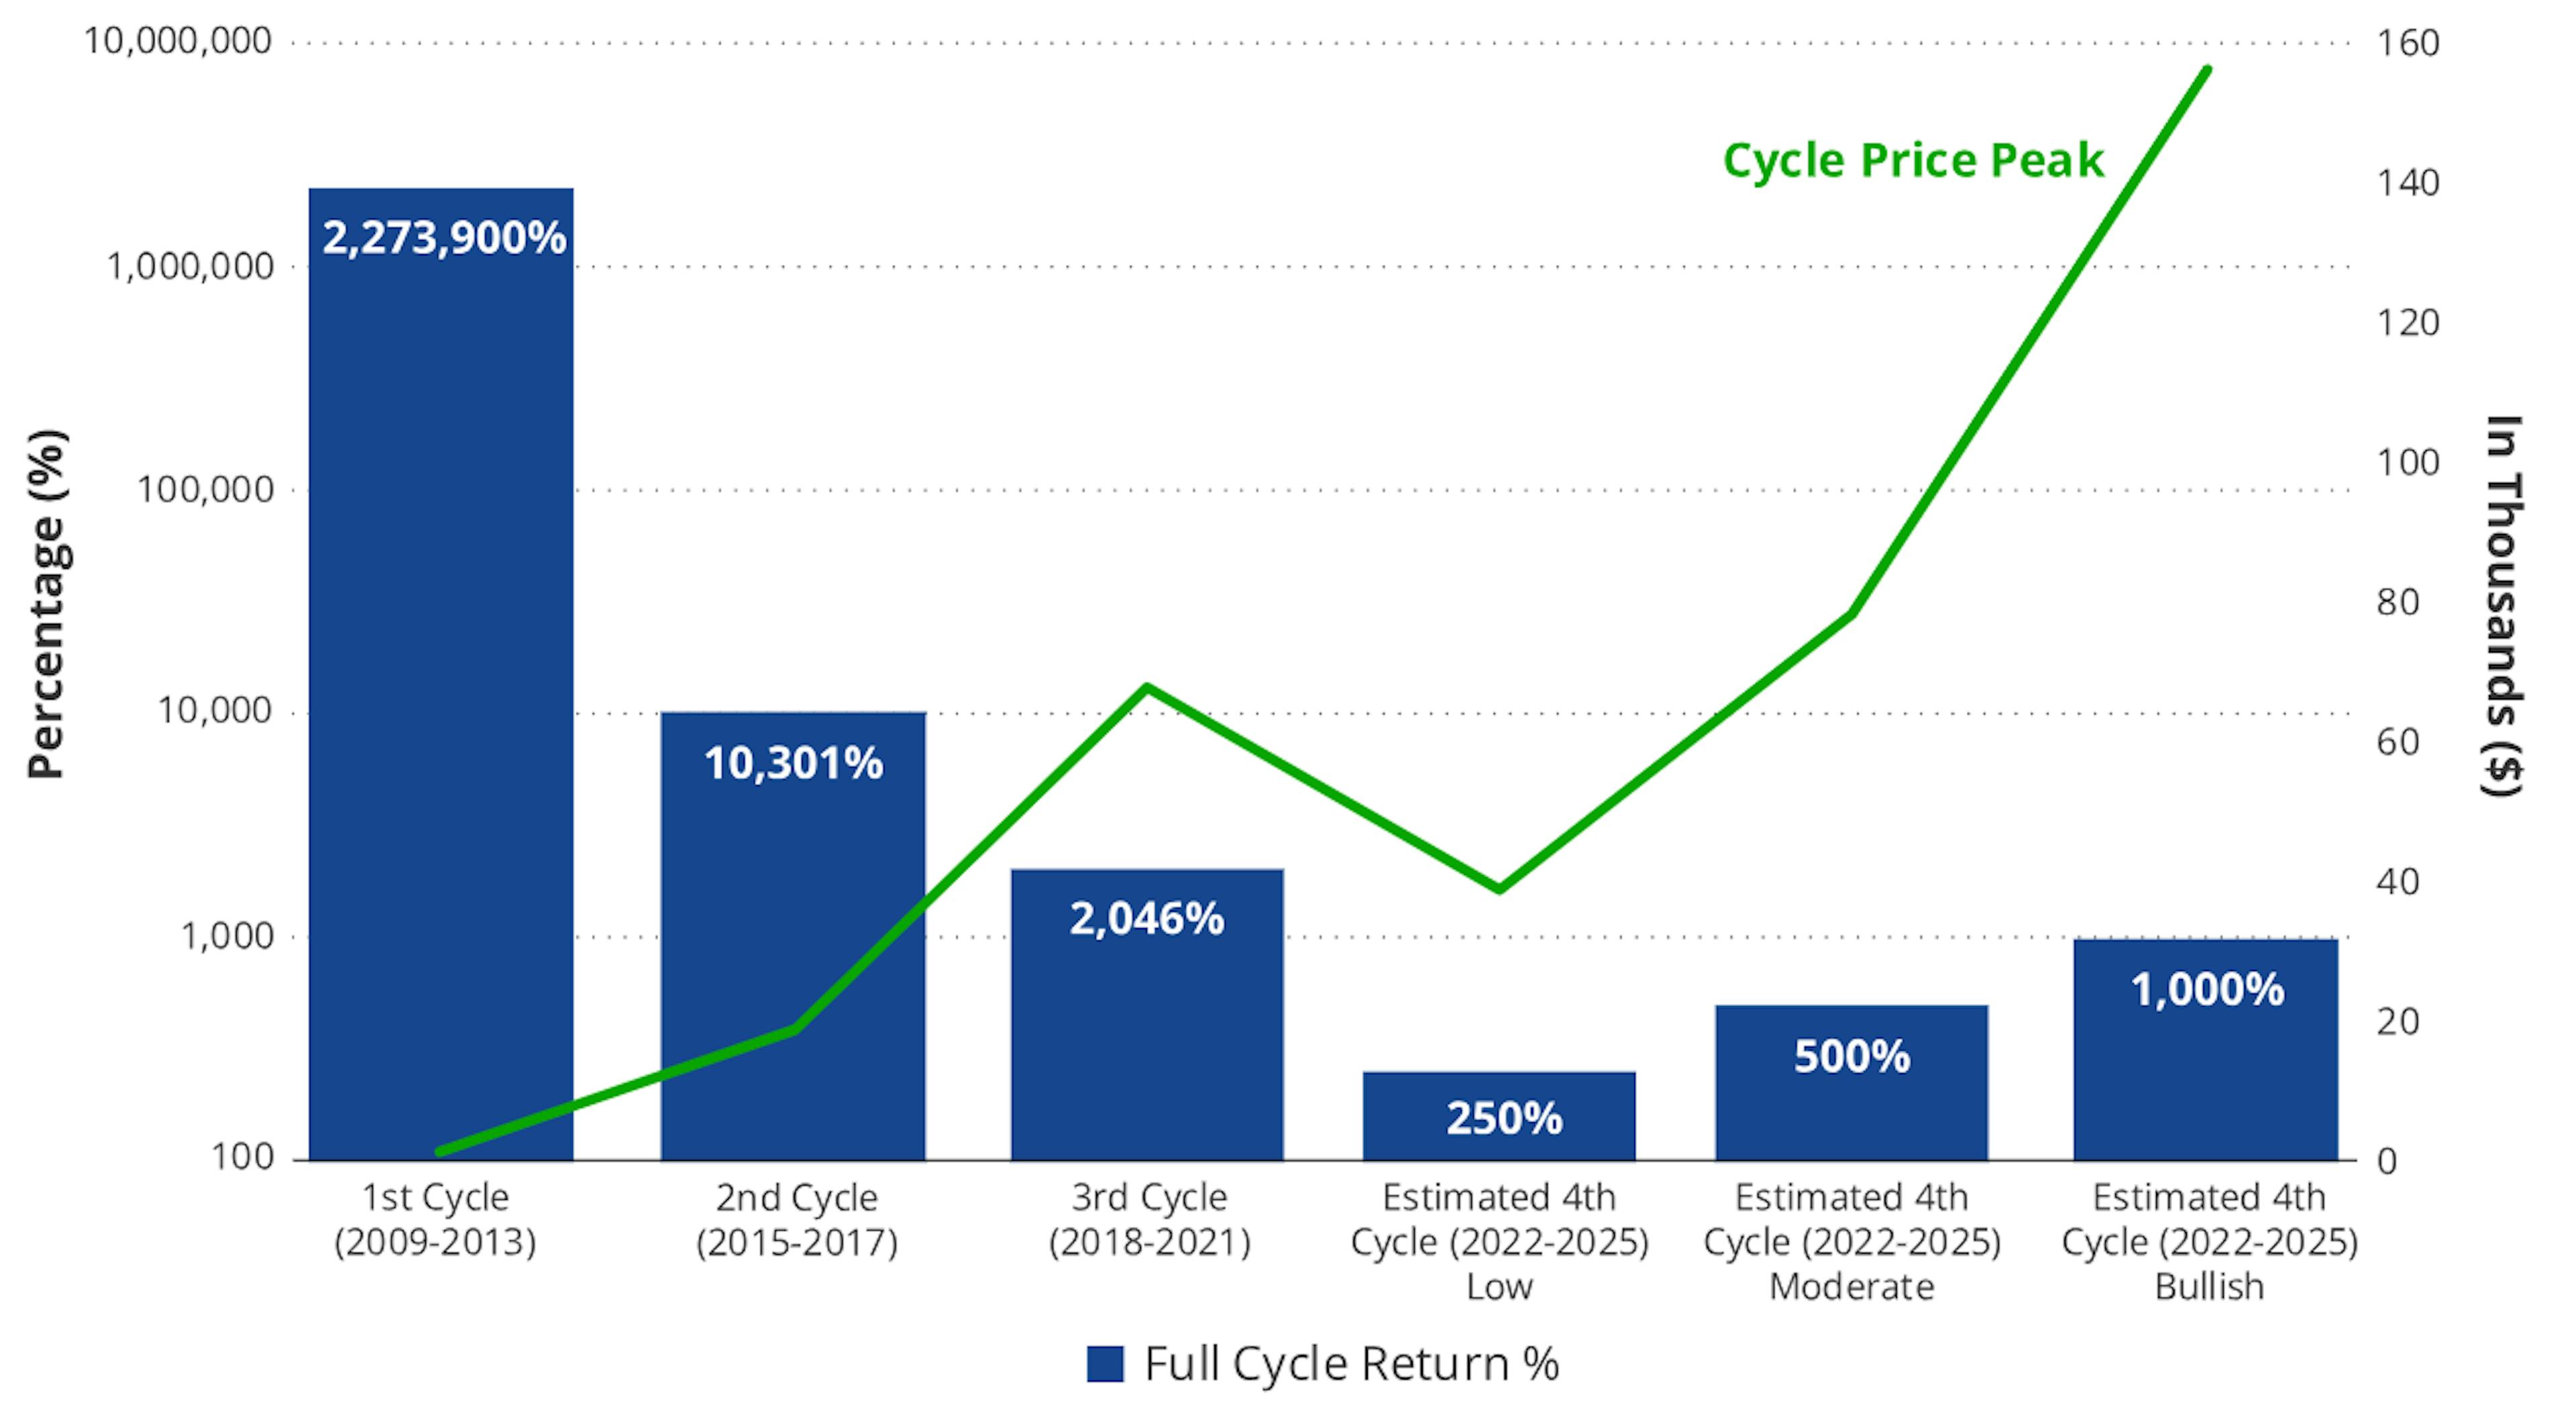 Cycle Price Peak